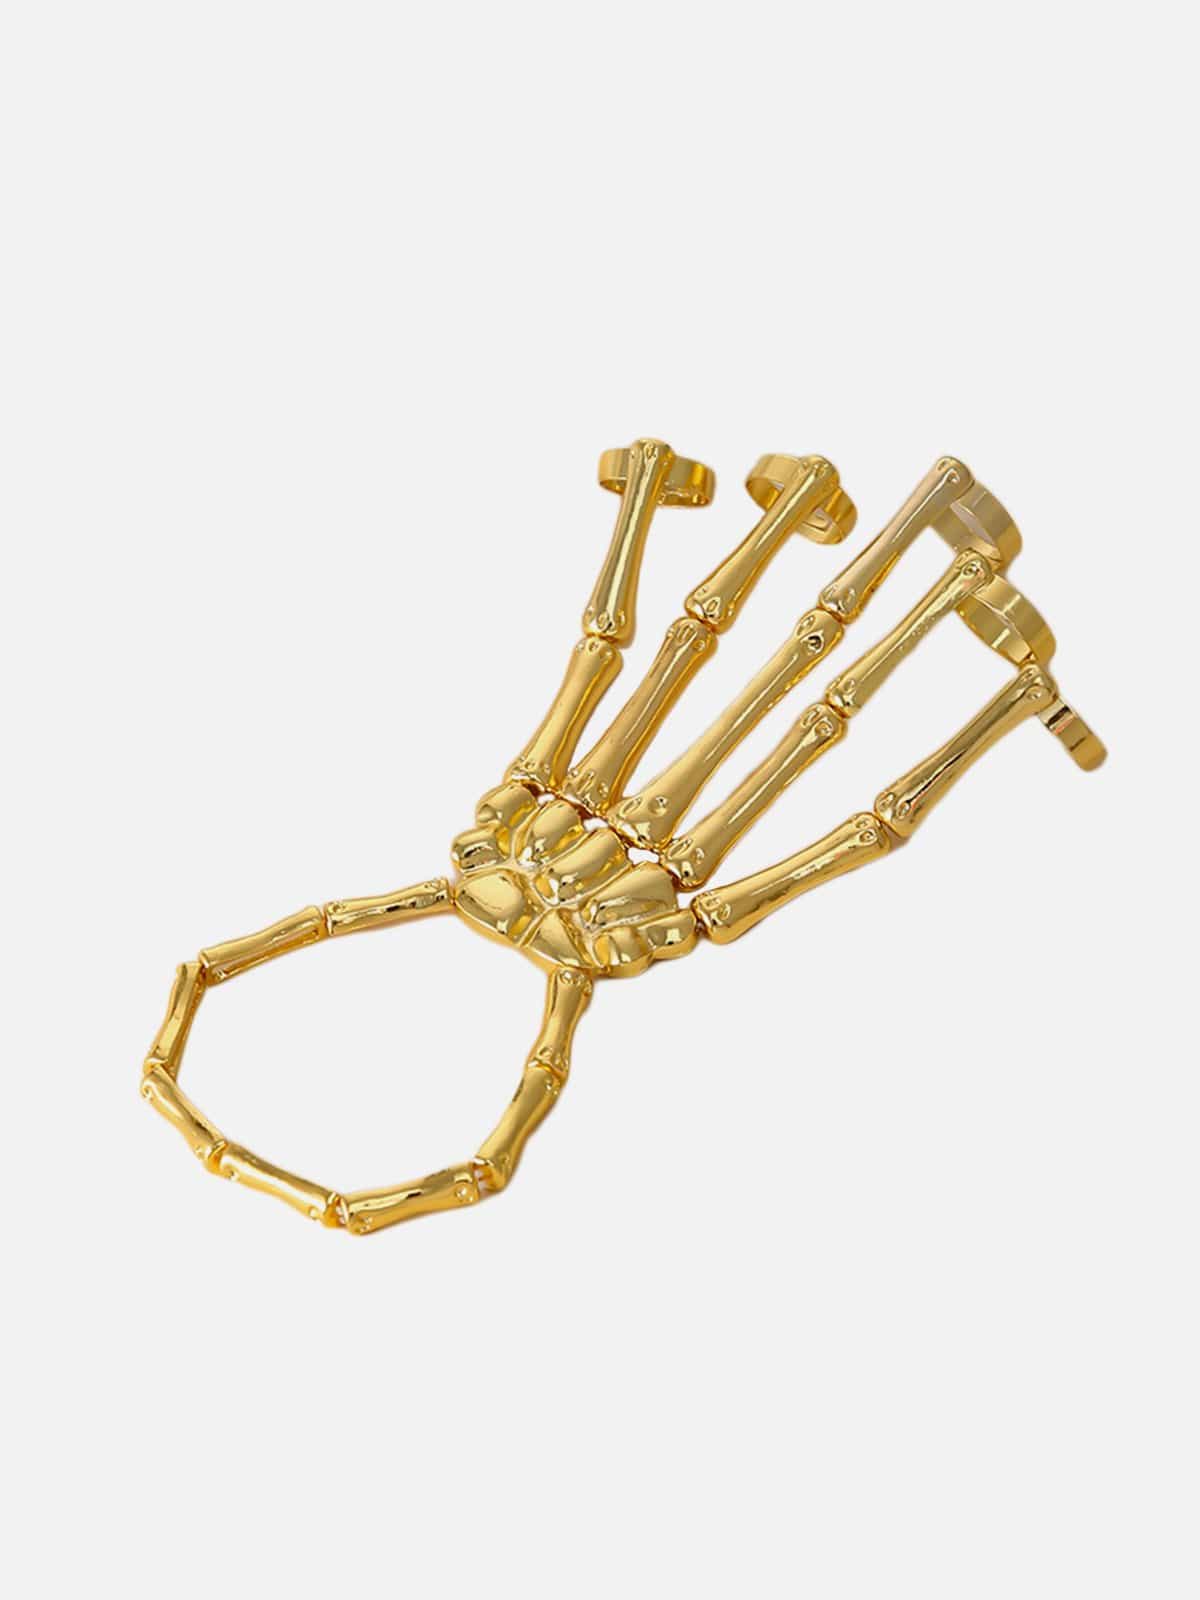 NEV Skeleton Hand Bone Bracelet